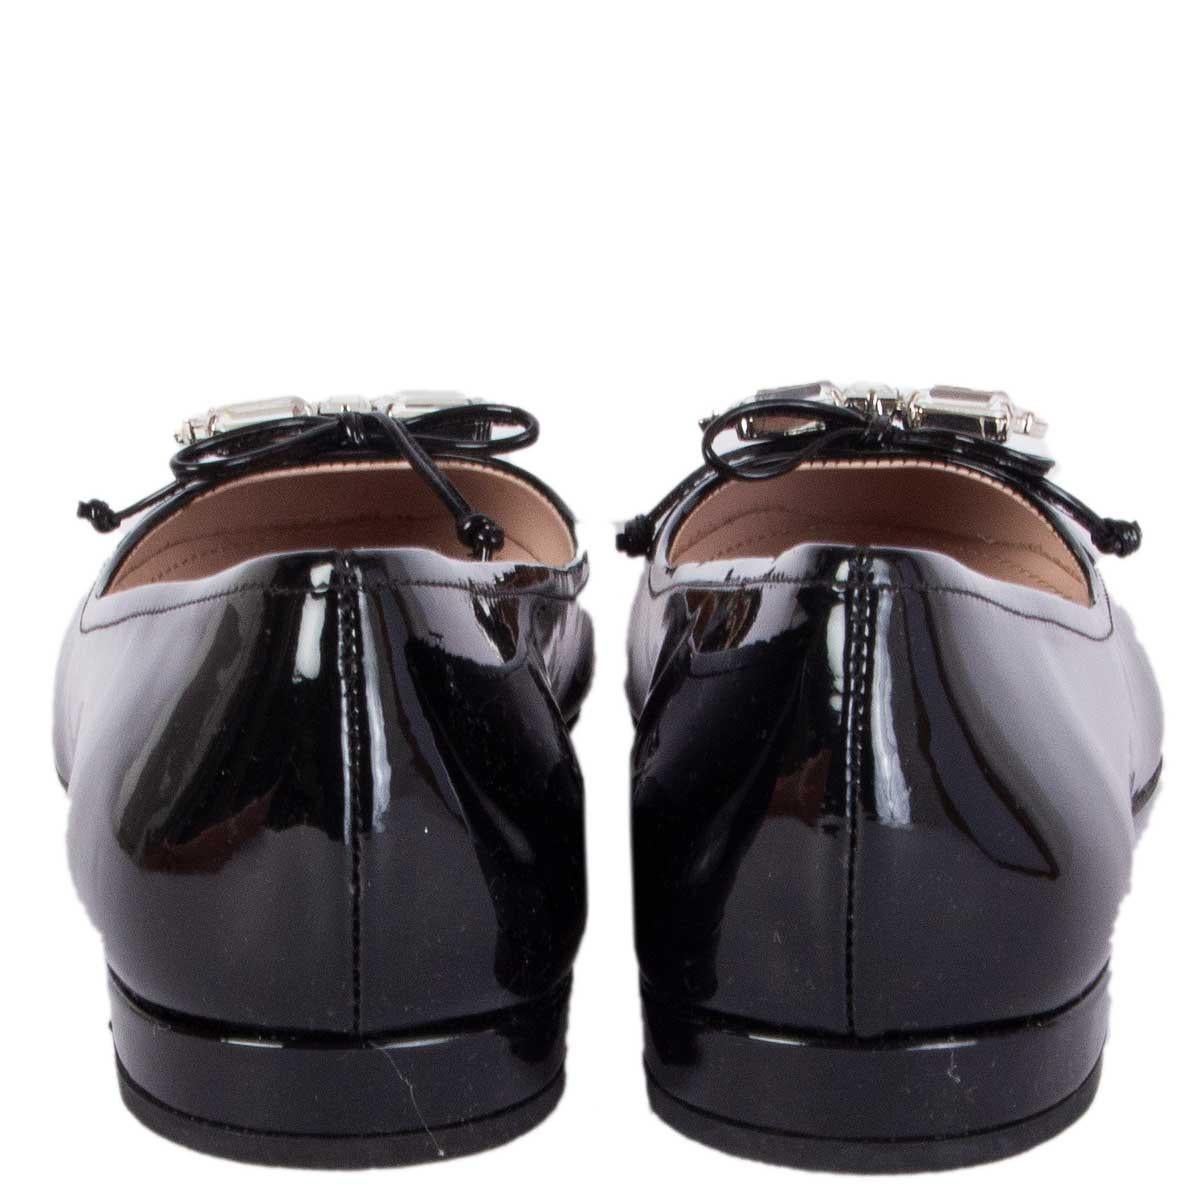 black patent leather ballet flats